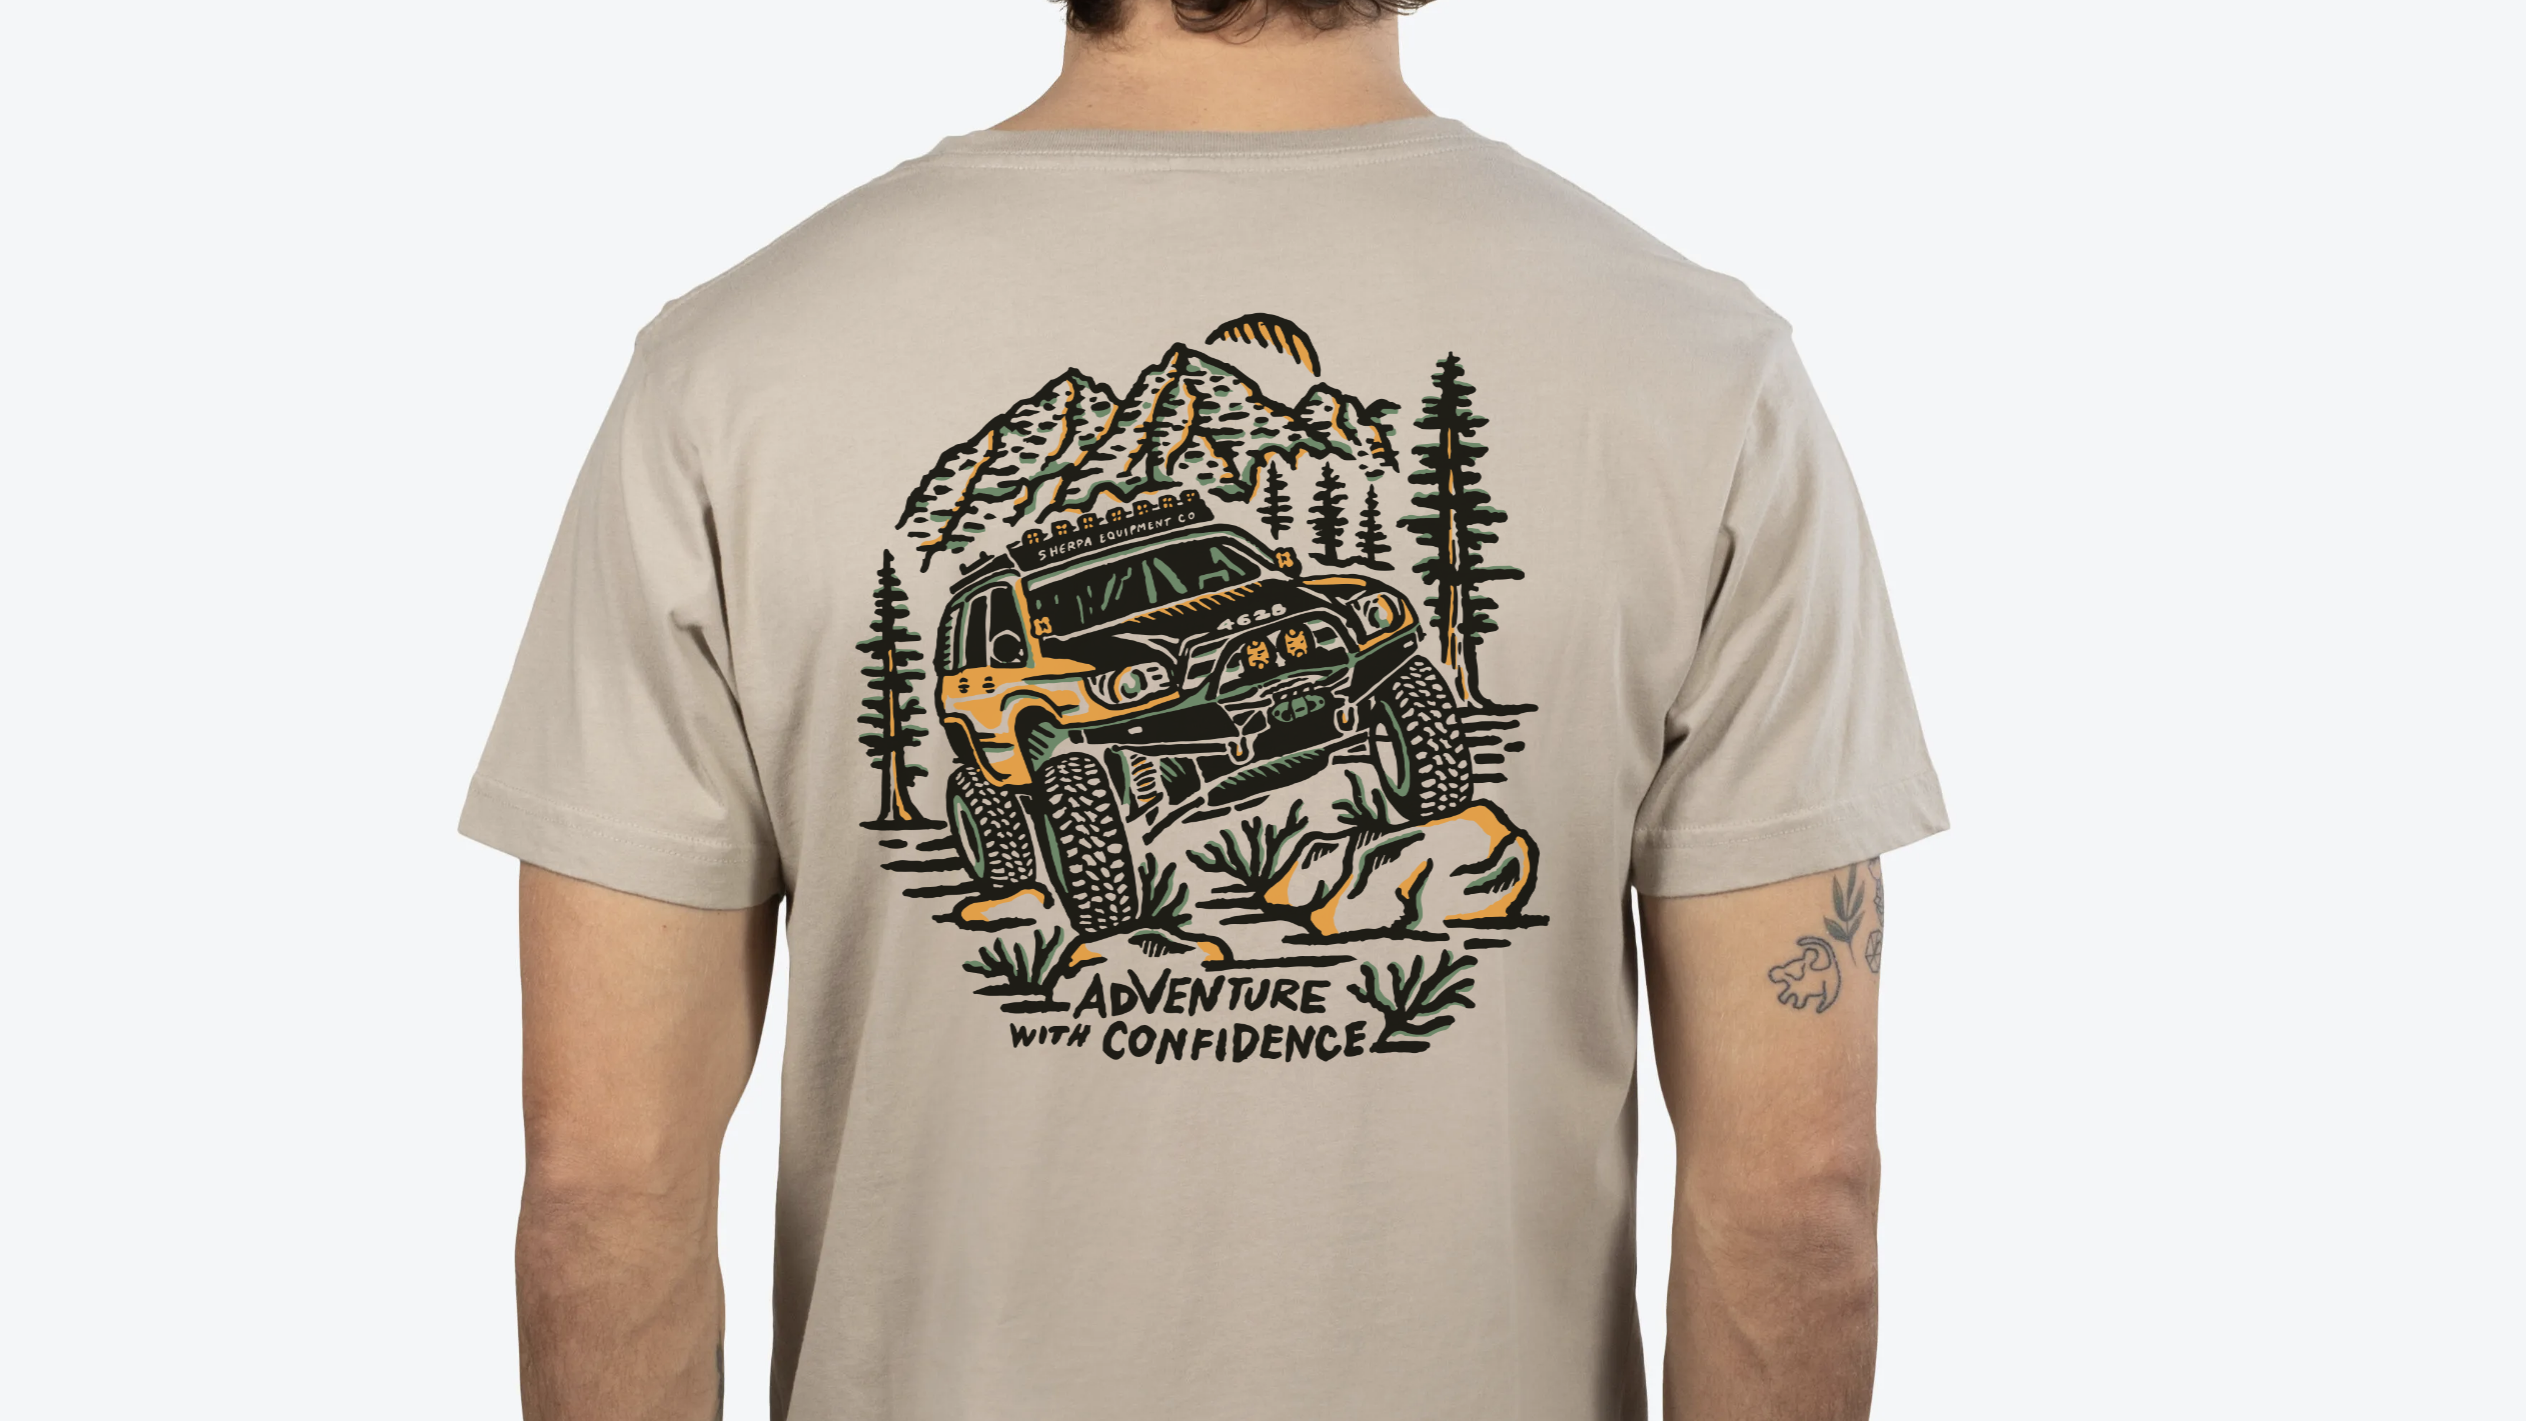 Sherpa x Rayco Designs T-Shirt